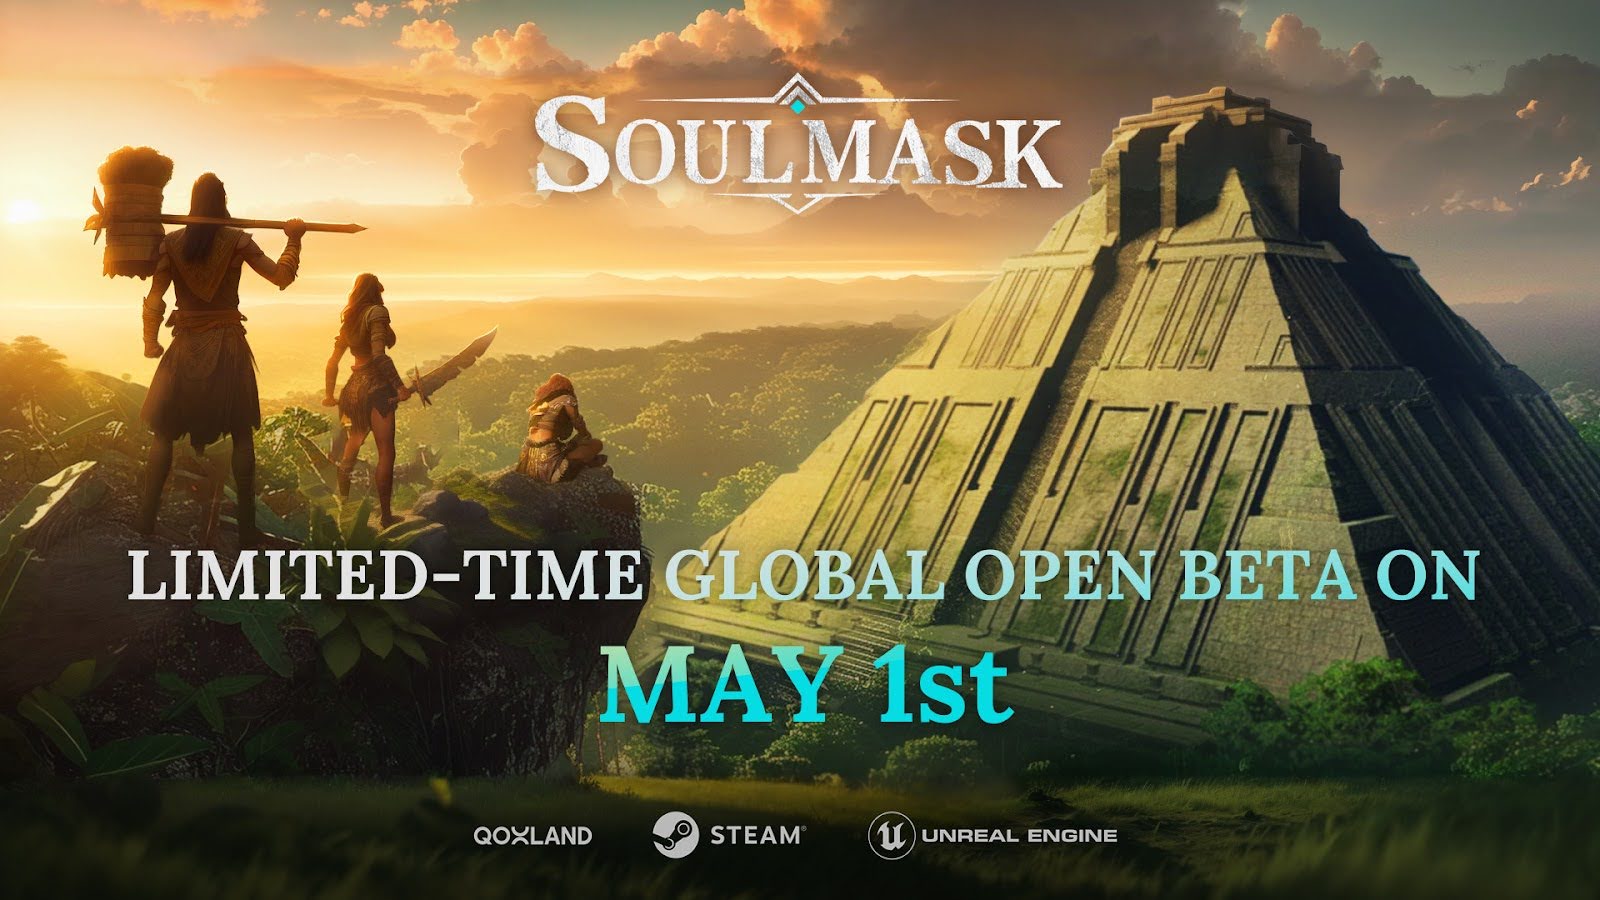 Soulmask Steam survival game: A warrior overlooking a temple in Steam survival game Soulmask